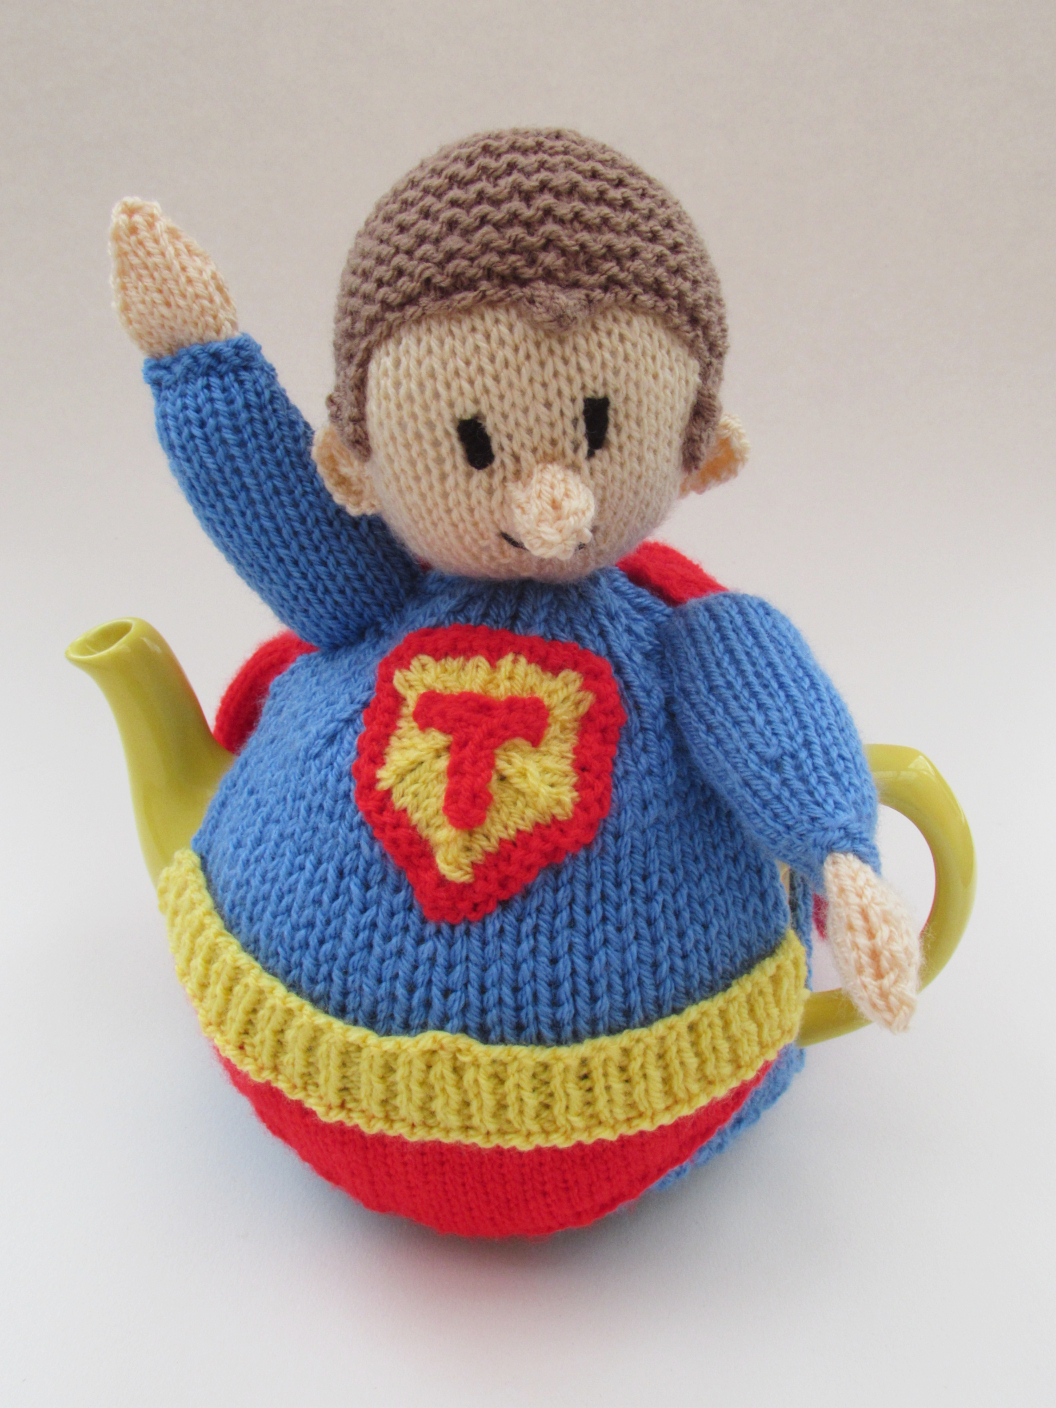 Superhero knitting pattern